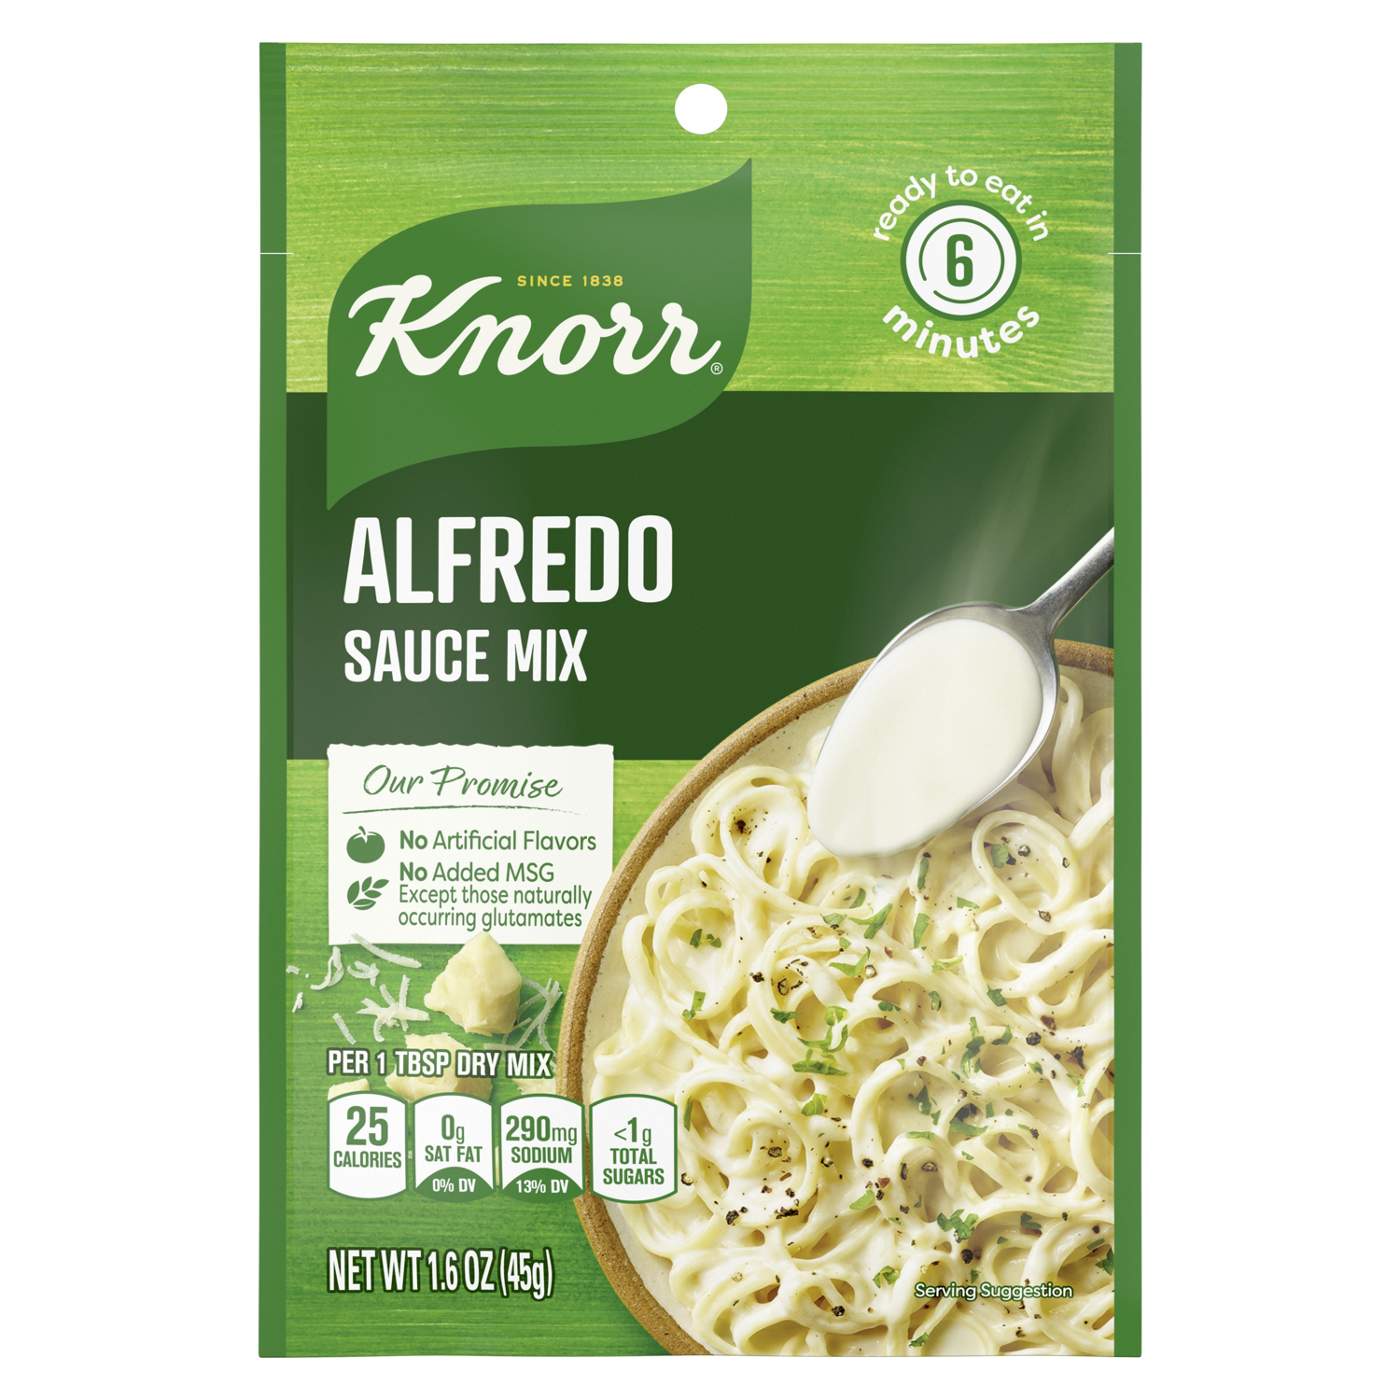 Knorr Sauce Mix Alfredo Sauce; image 1 of 3